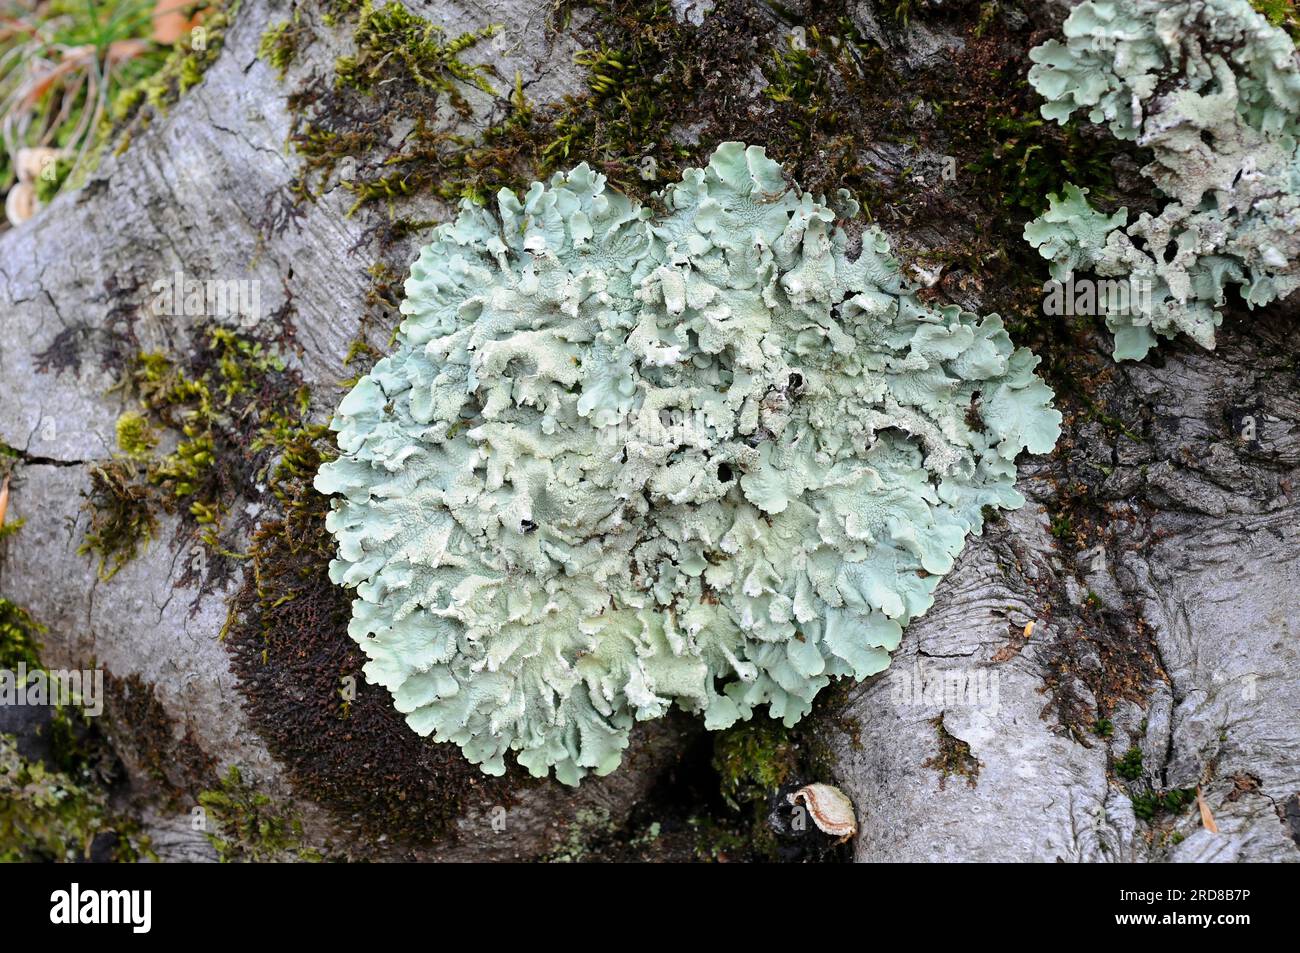 Parmelia tiliacea is a foliose grey greenish lichen. Ascomycota. Parmeliaceae. This photo was taken in Montseny Biosphere Reserve, Barcelona, Spain. Stock Photo